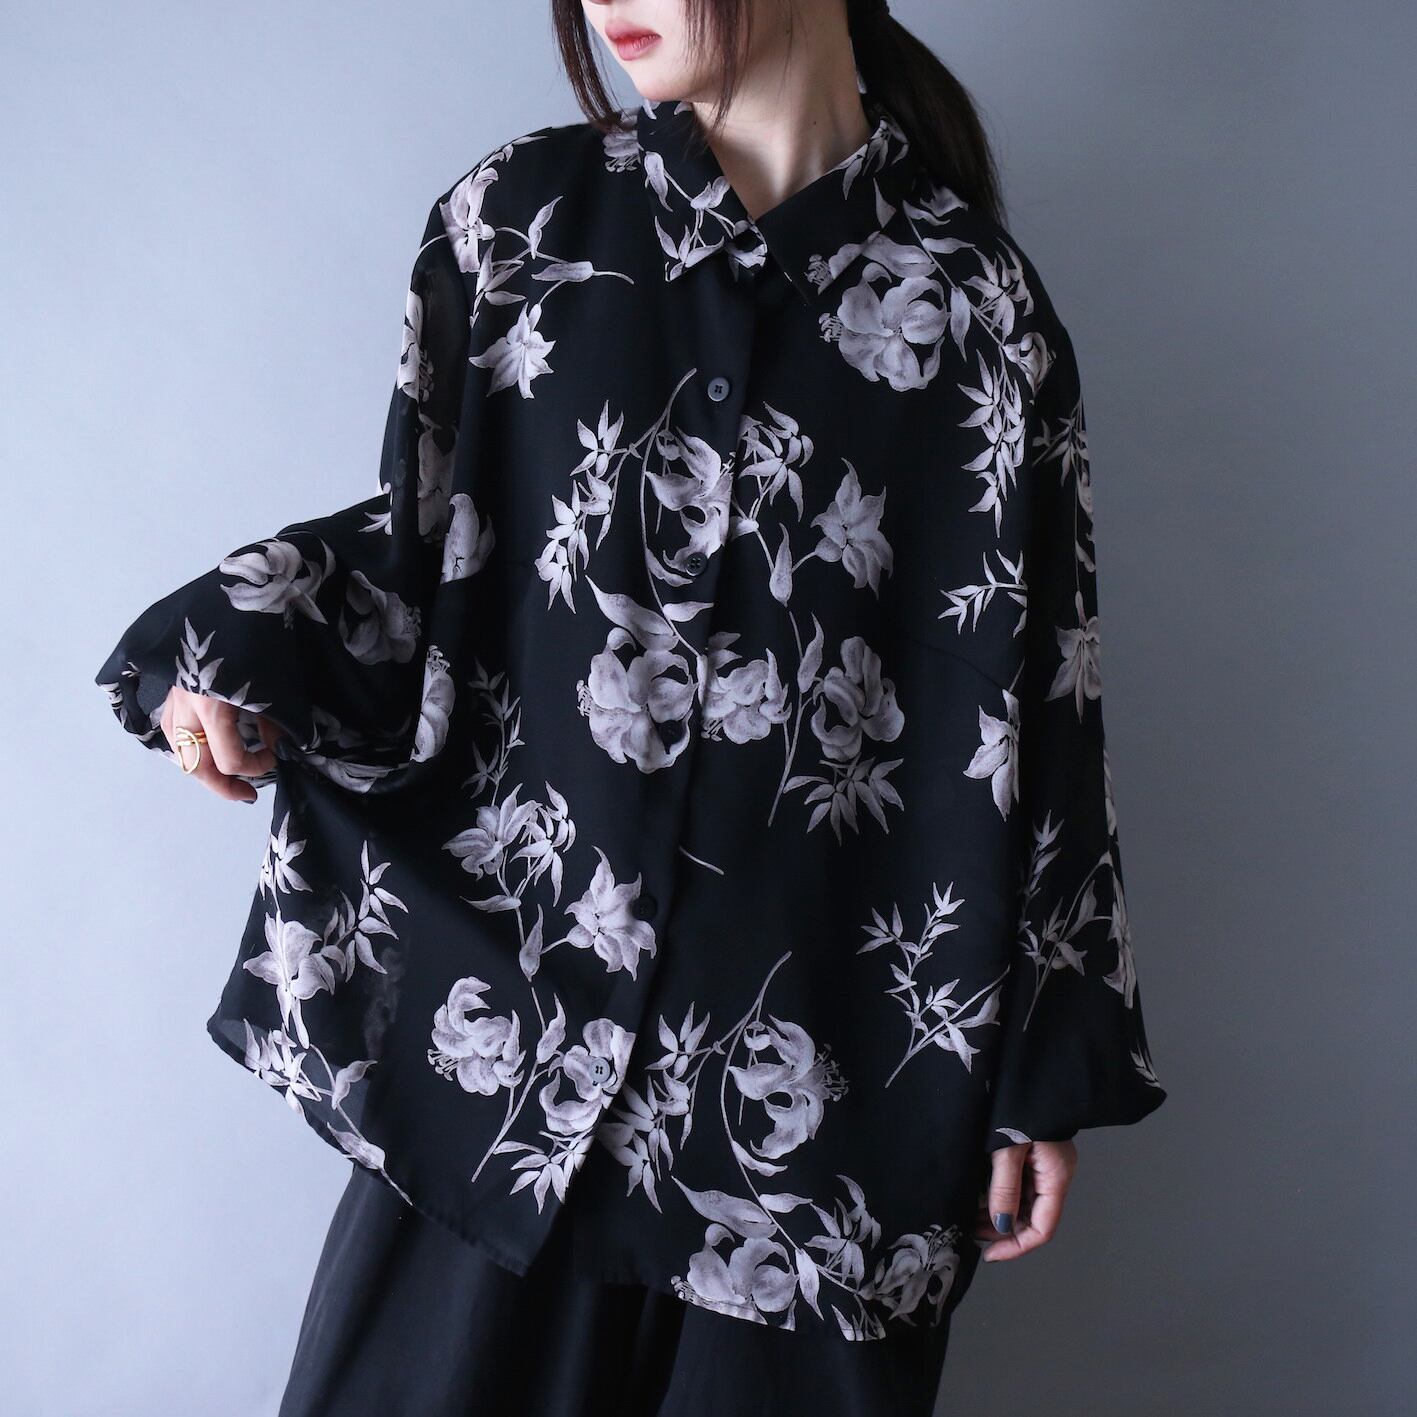 flower art pattern over silhouette black mode see-through shirt